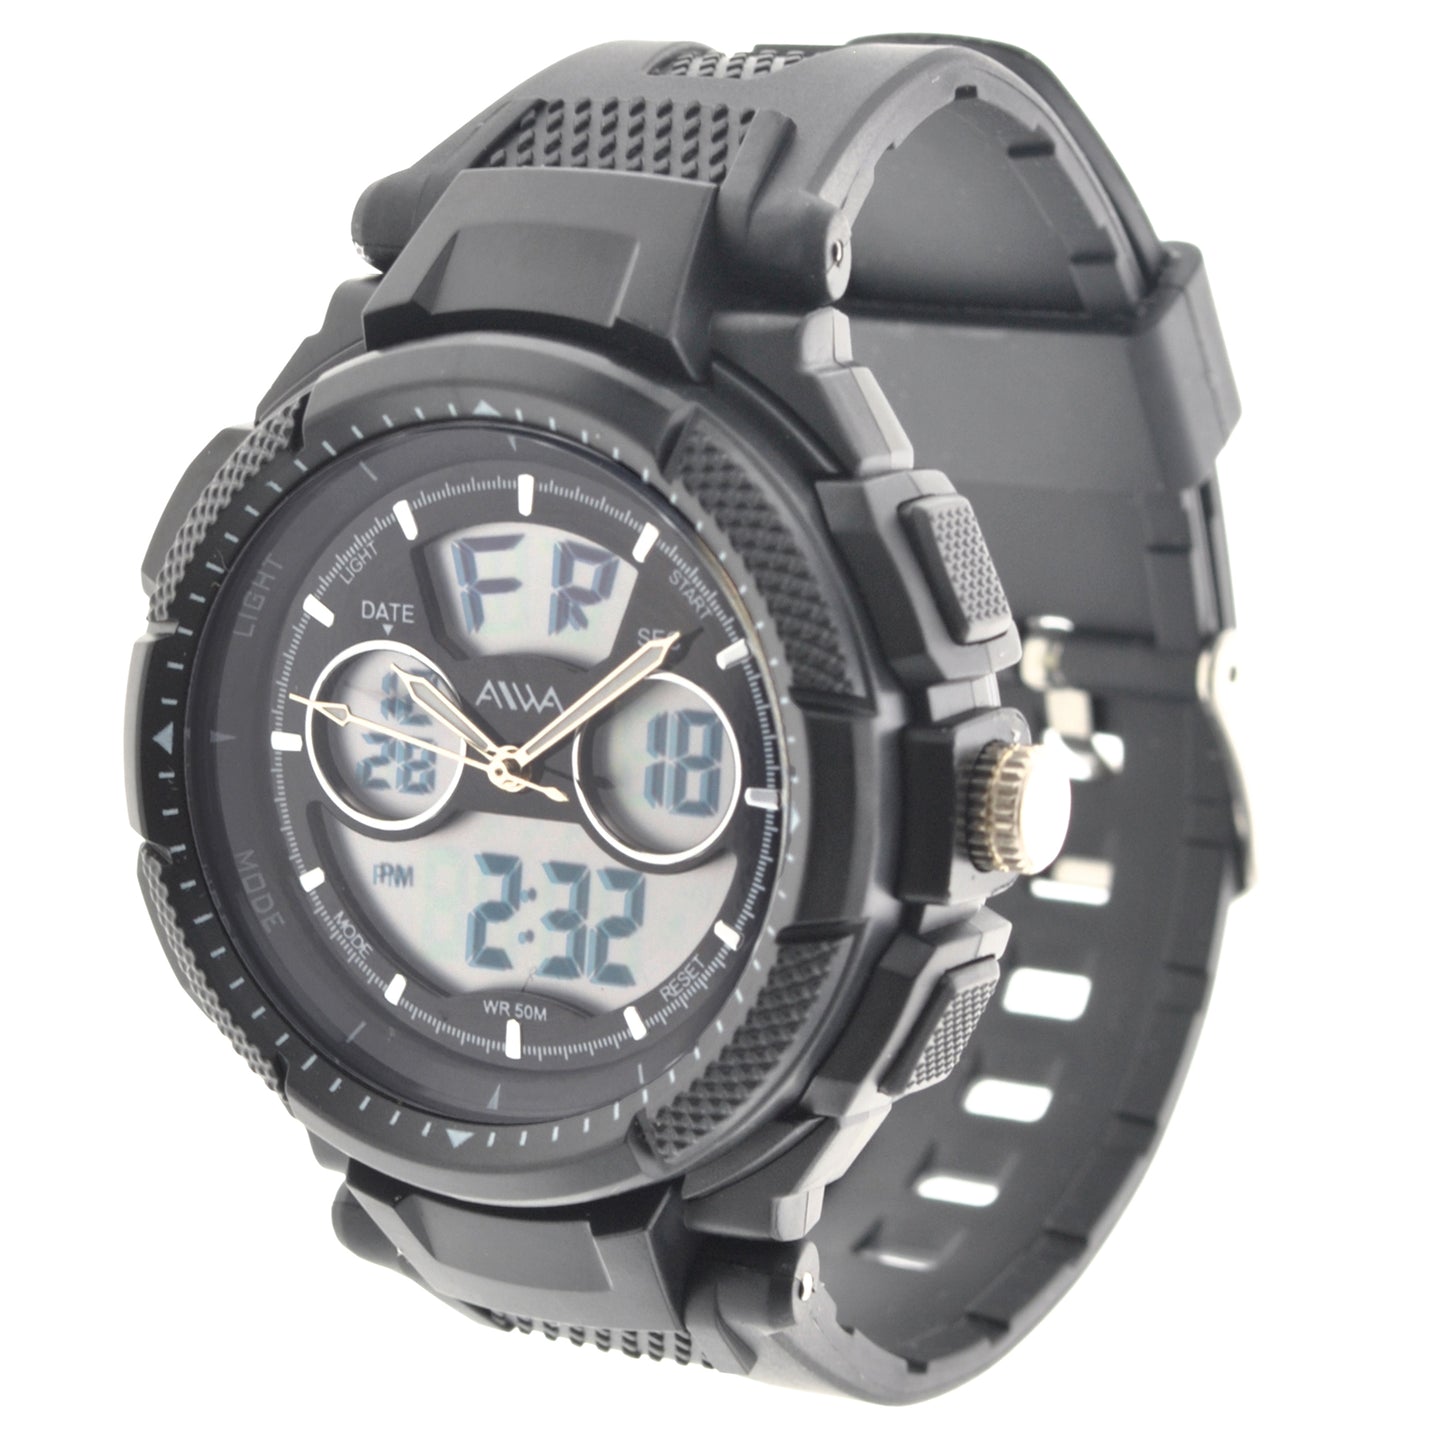 art. 10315 005NG - AIWA Time - Reloj Análogo-Digital, Caballero, Sumergible, 5 ATM